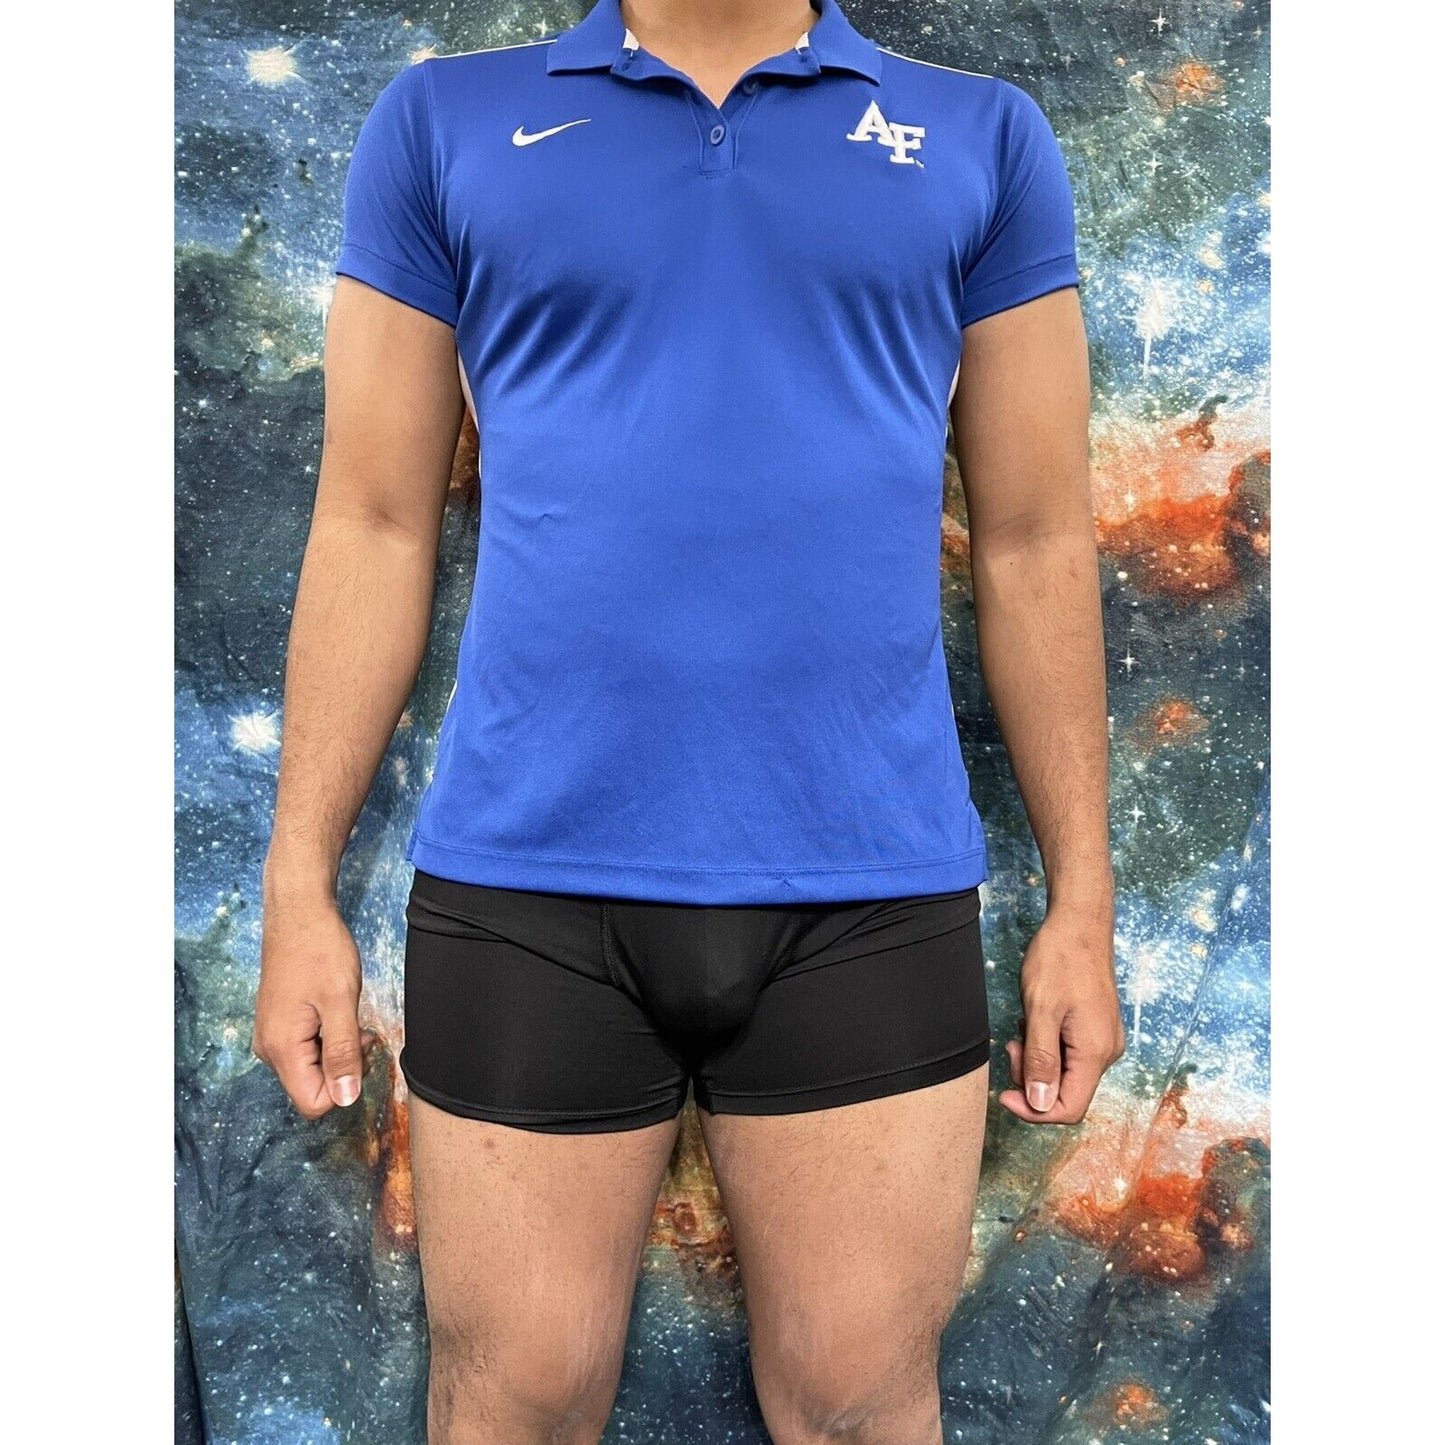 Air Force Nike Dri-Fit Large Blue Polo Shirt